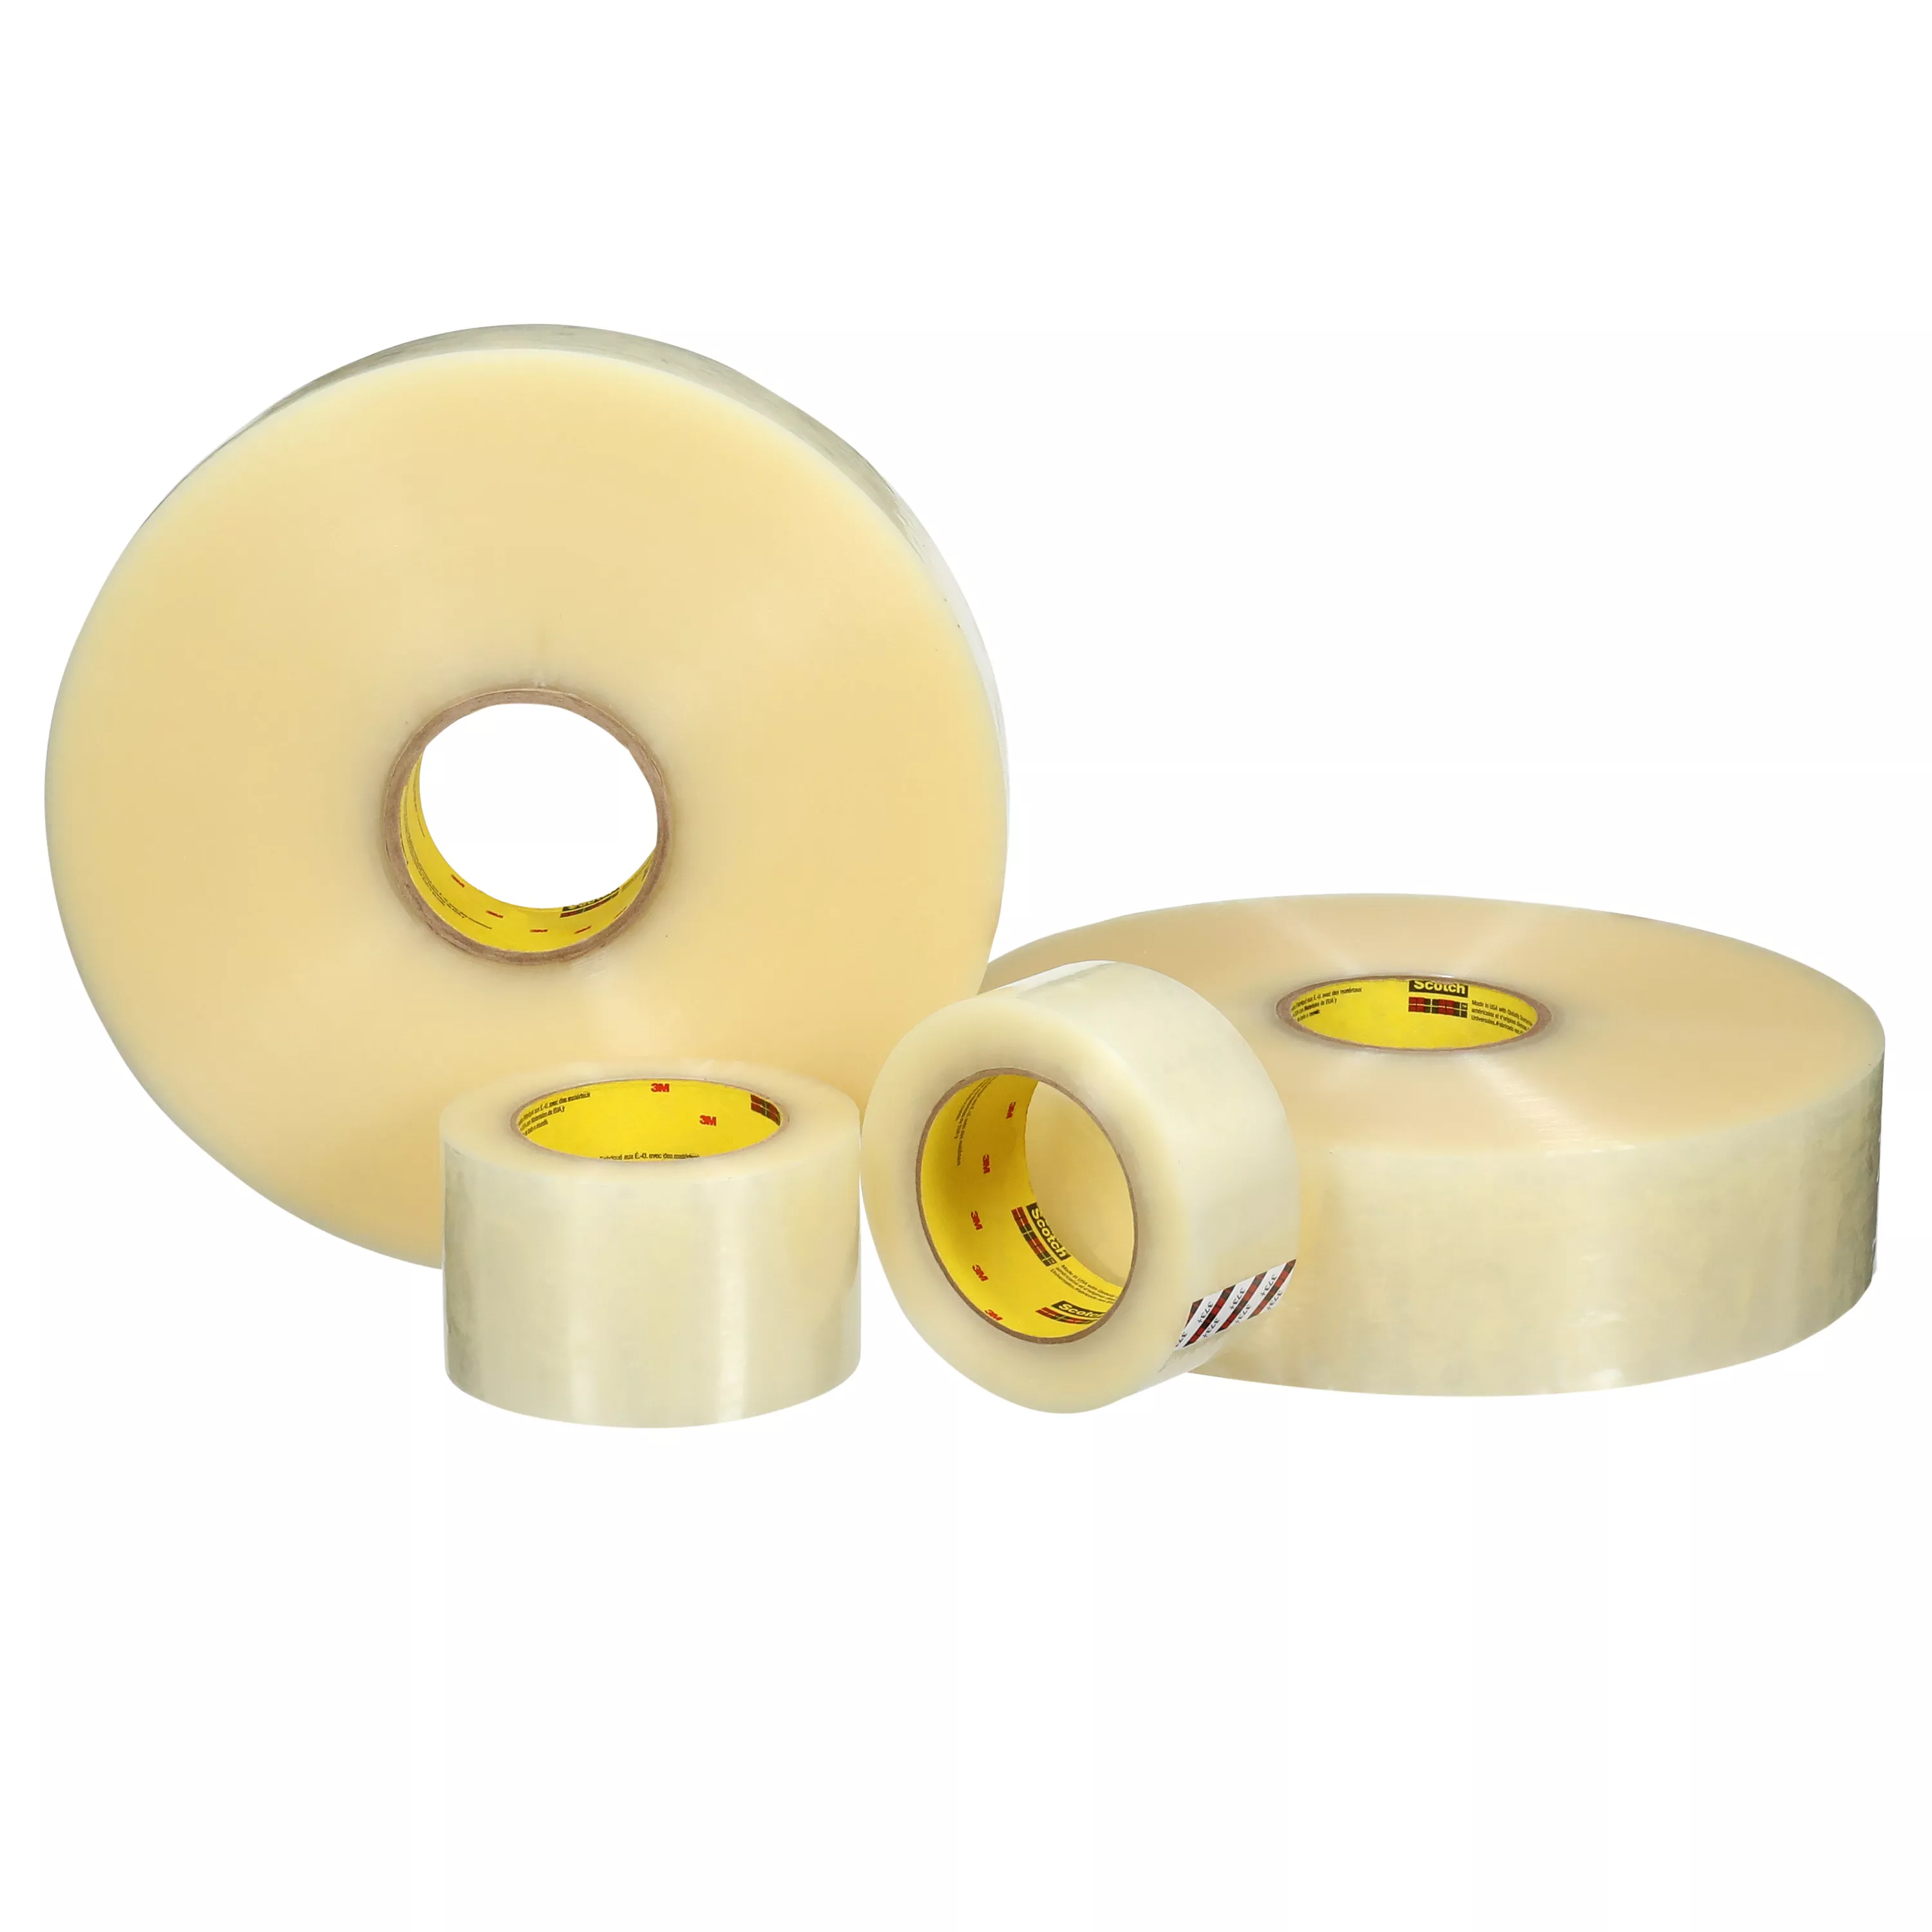 SKU 7100288976 | Scotch® High Tack Box Sealing Tape 373+